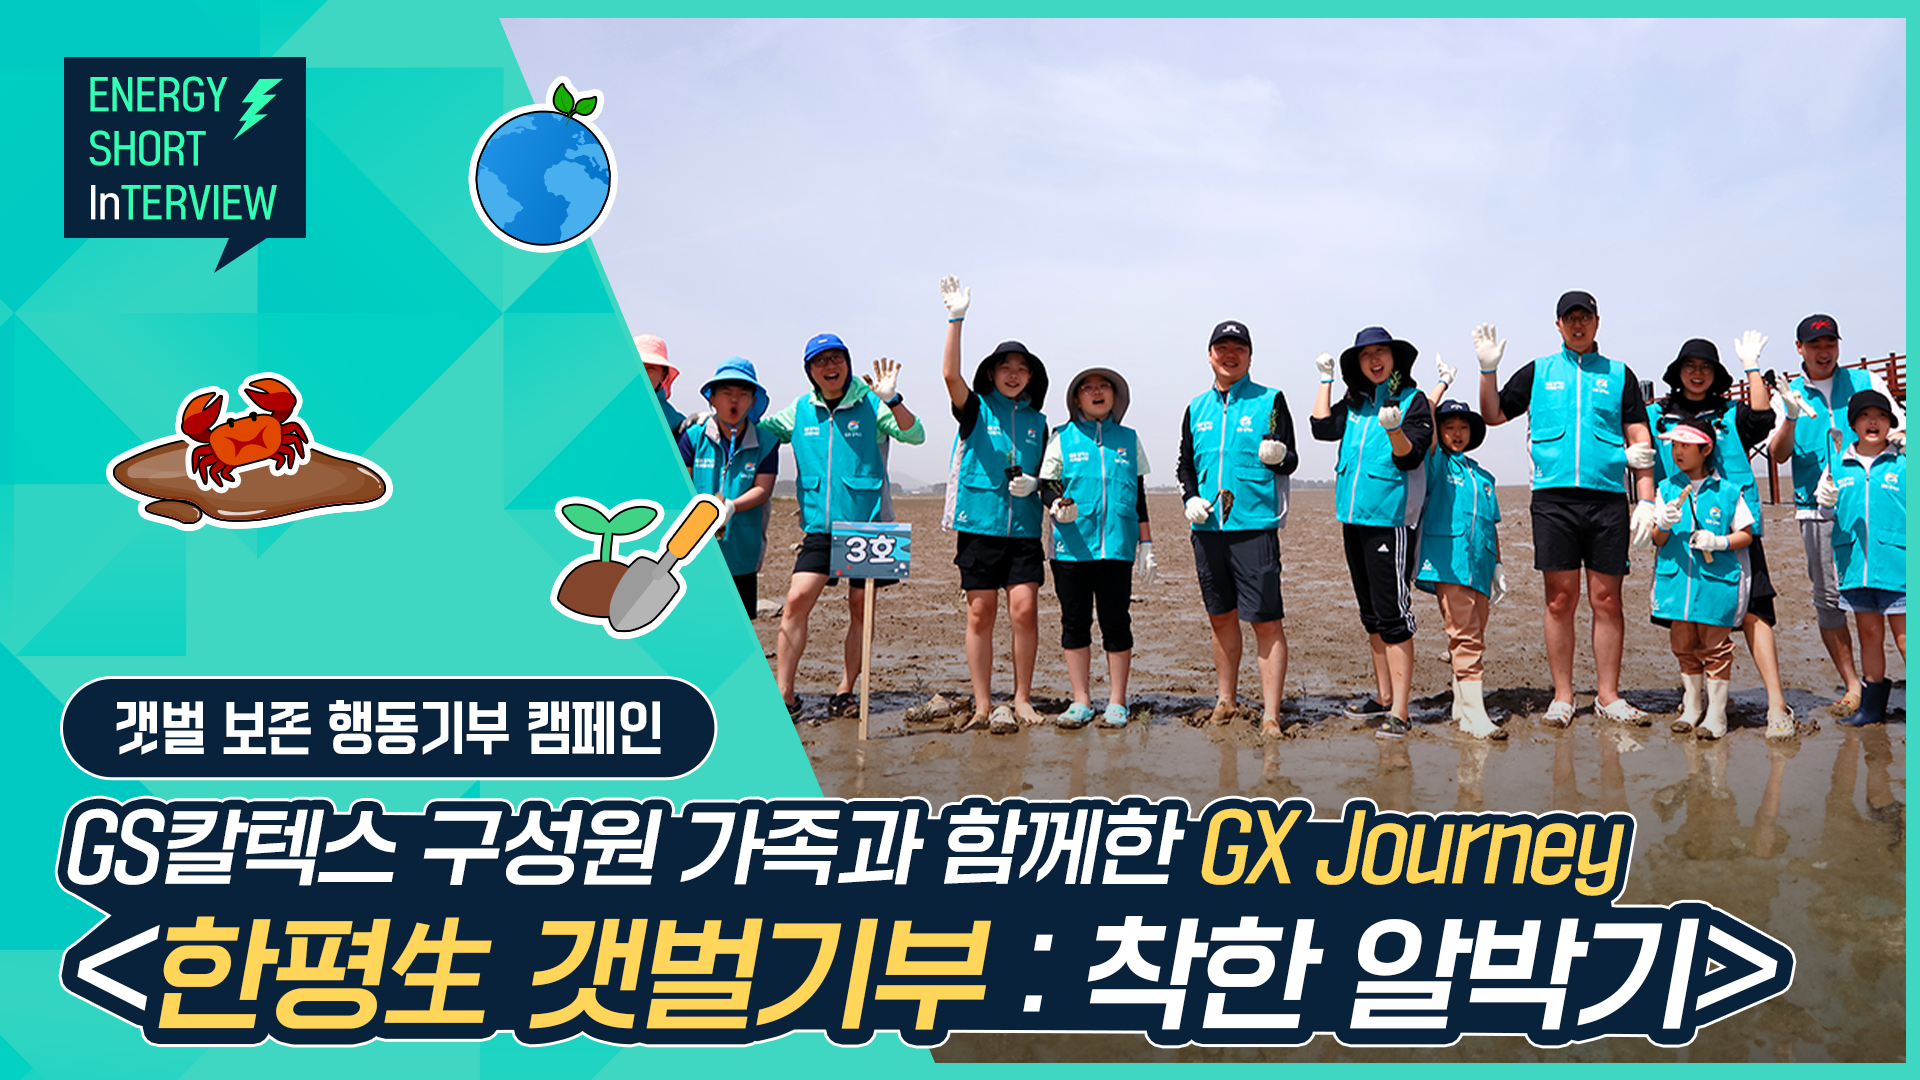 GS칼텍스의 GX Journey, <한평生 갯벌기부> 캠페인 현장에 초대합니다!🌱 | TH F 1